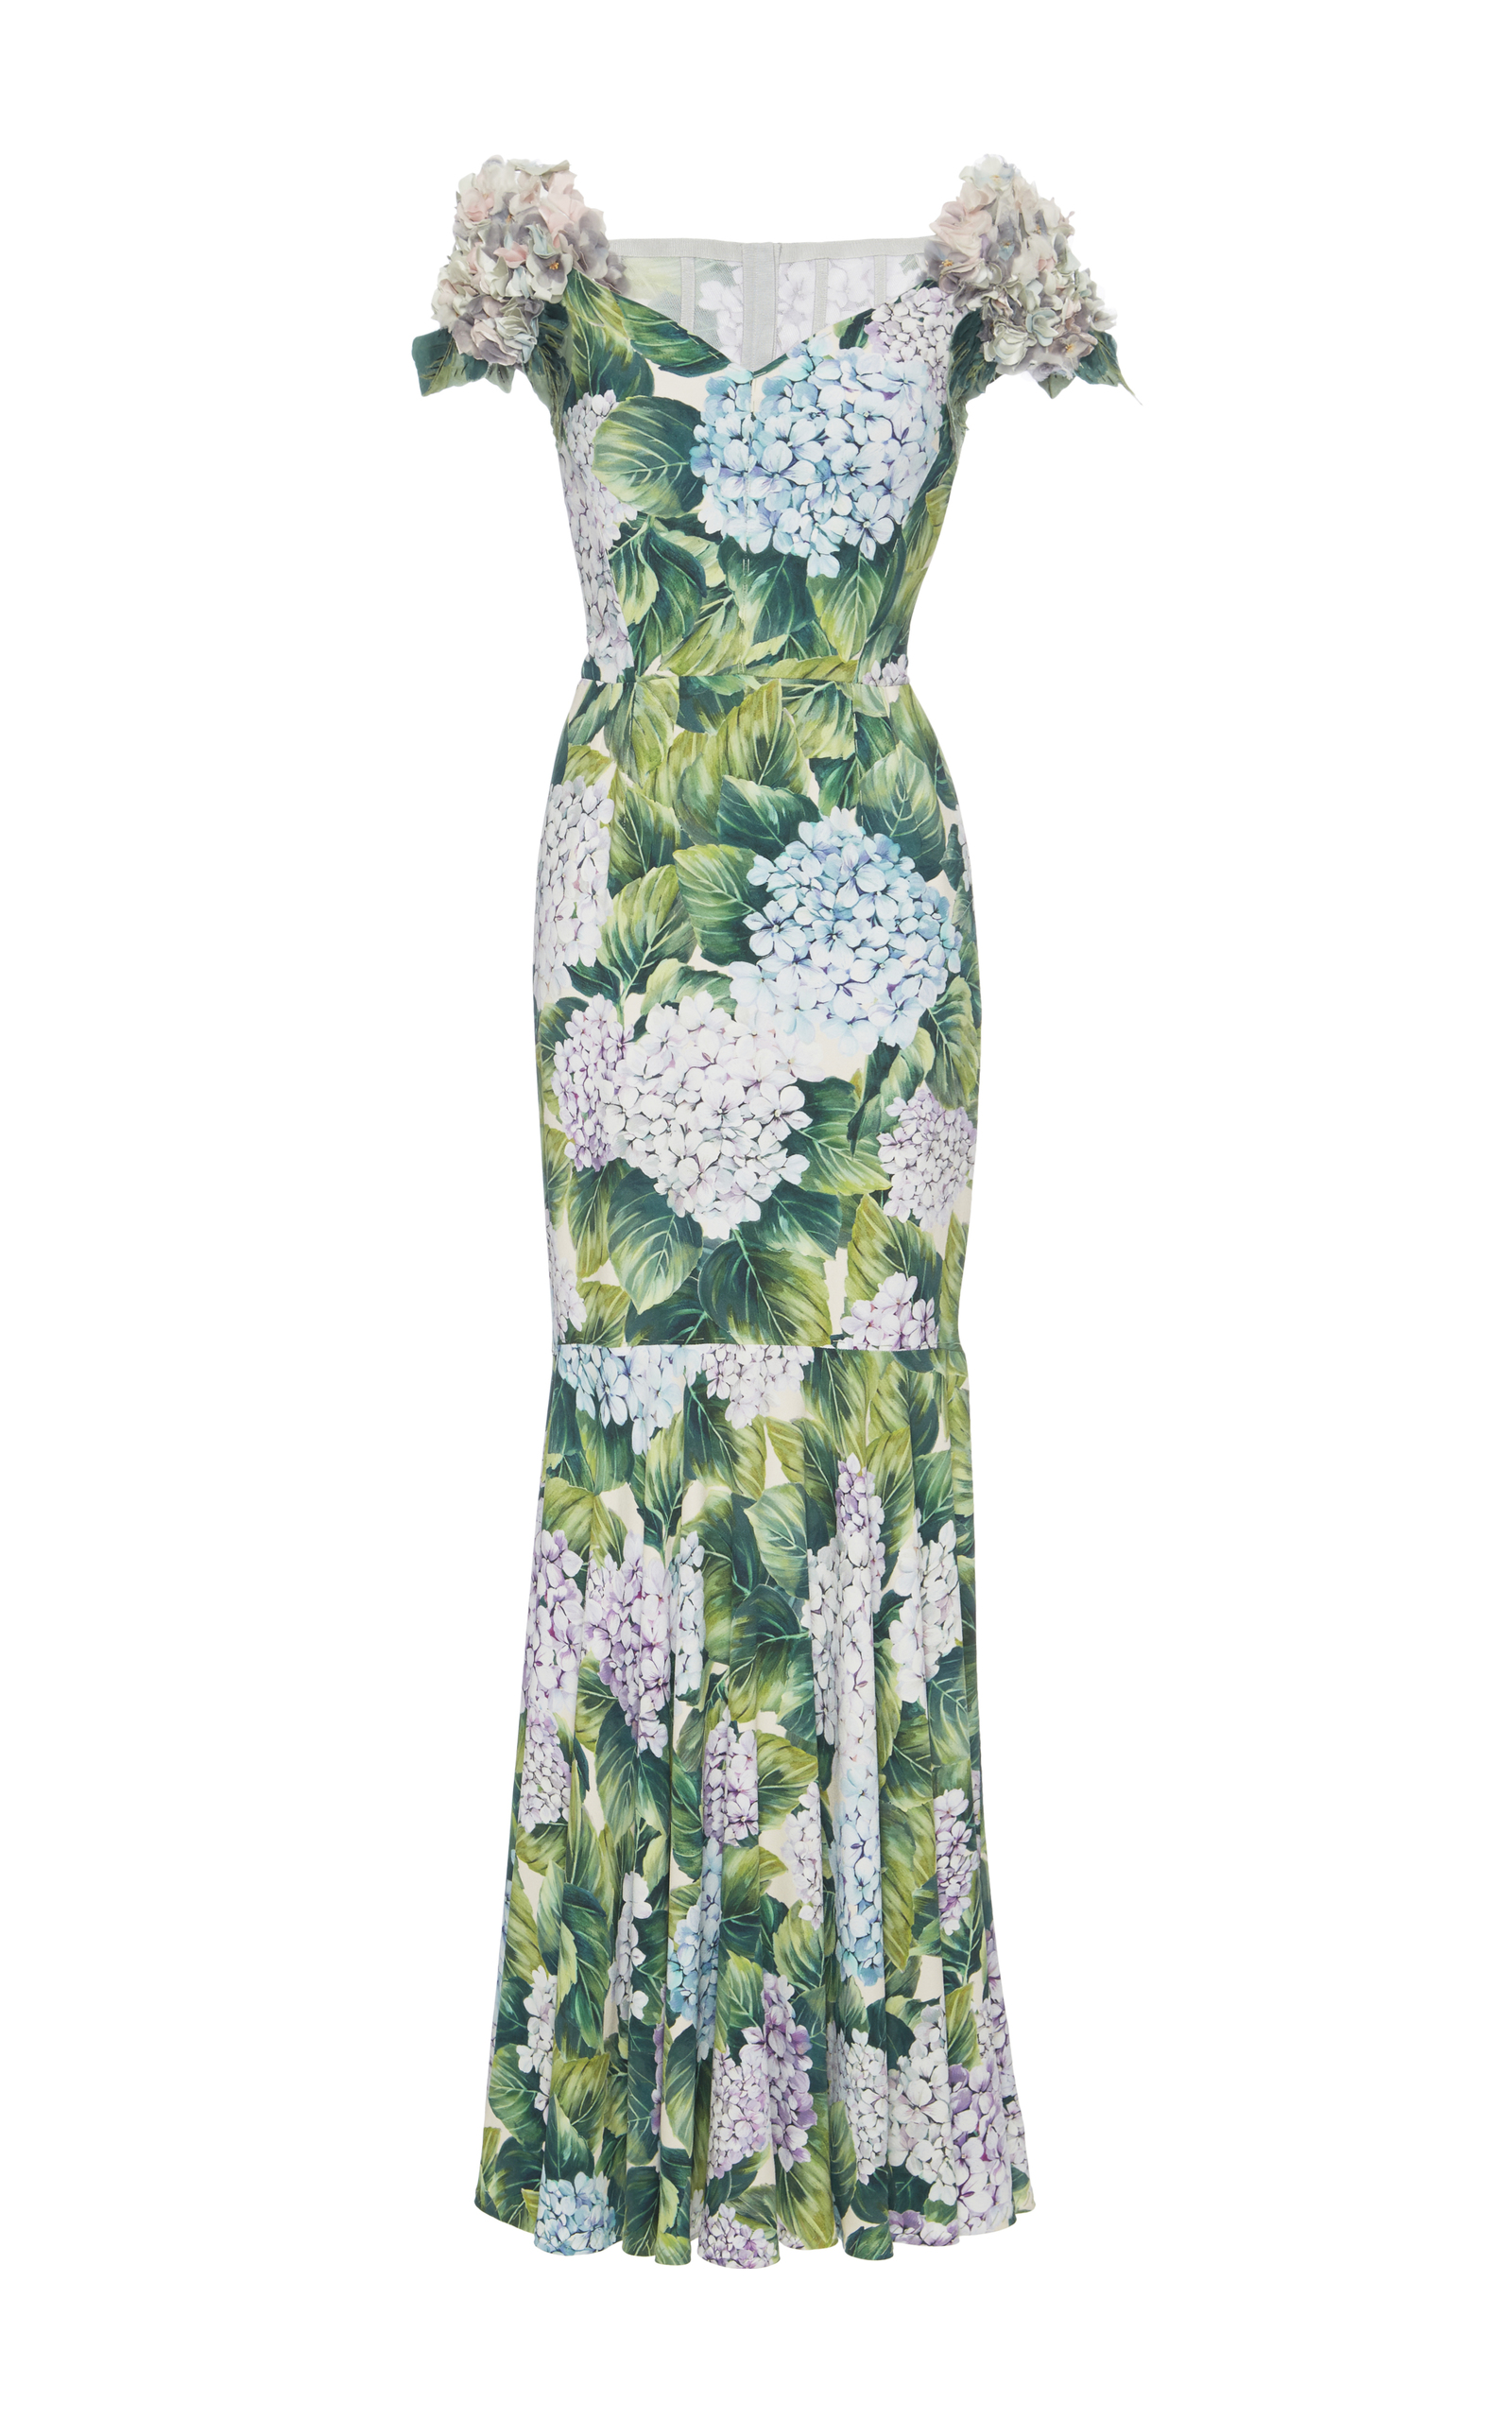 dolce gabbana green floral dress